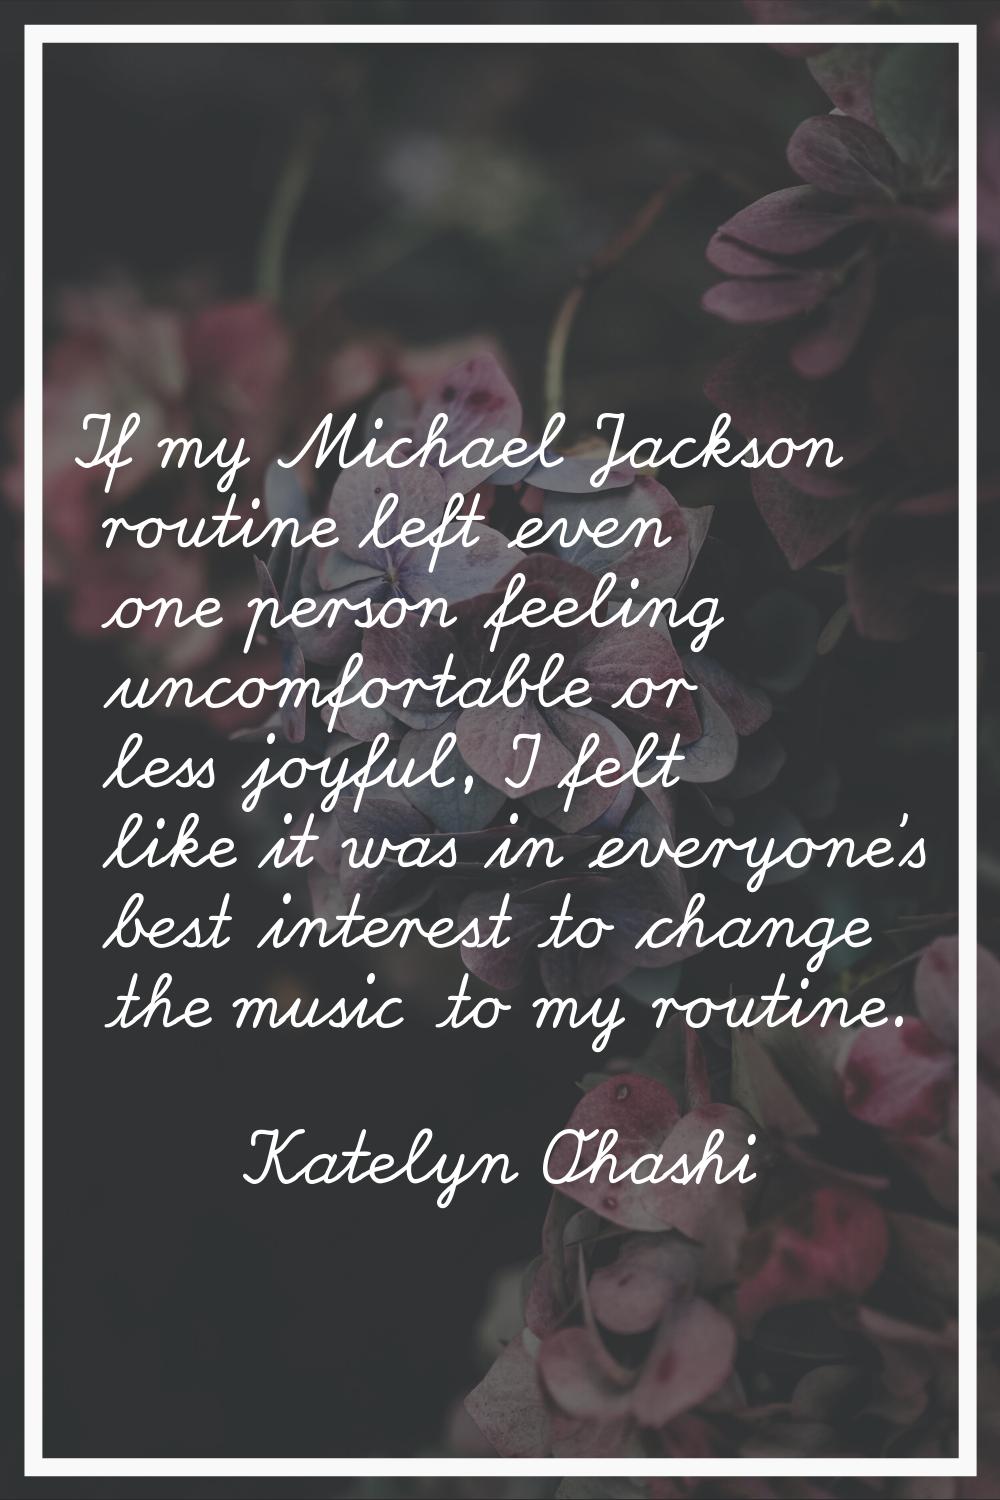 If my Michael Jackson routine left even one person feeling uncomfortable or less joyful, I felt lik